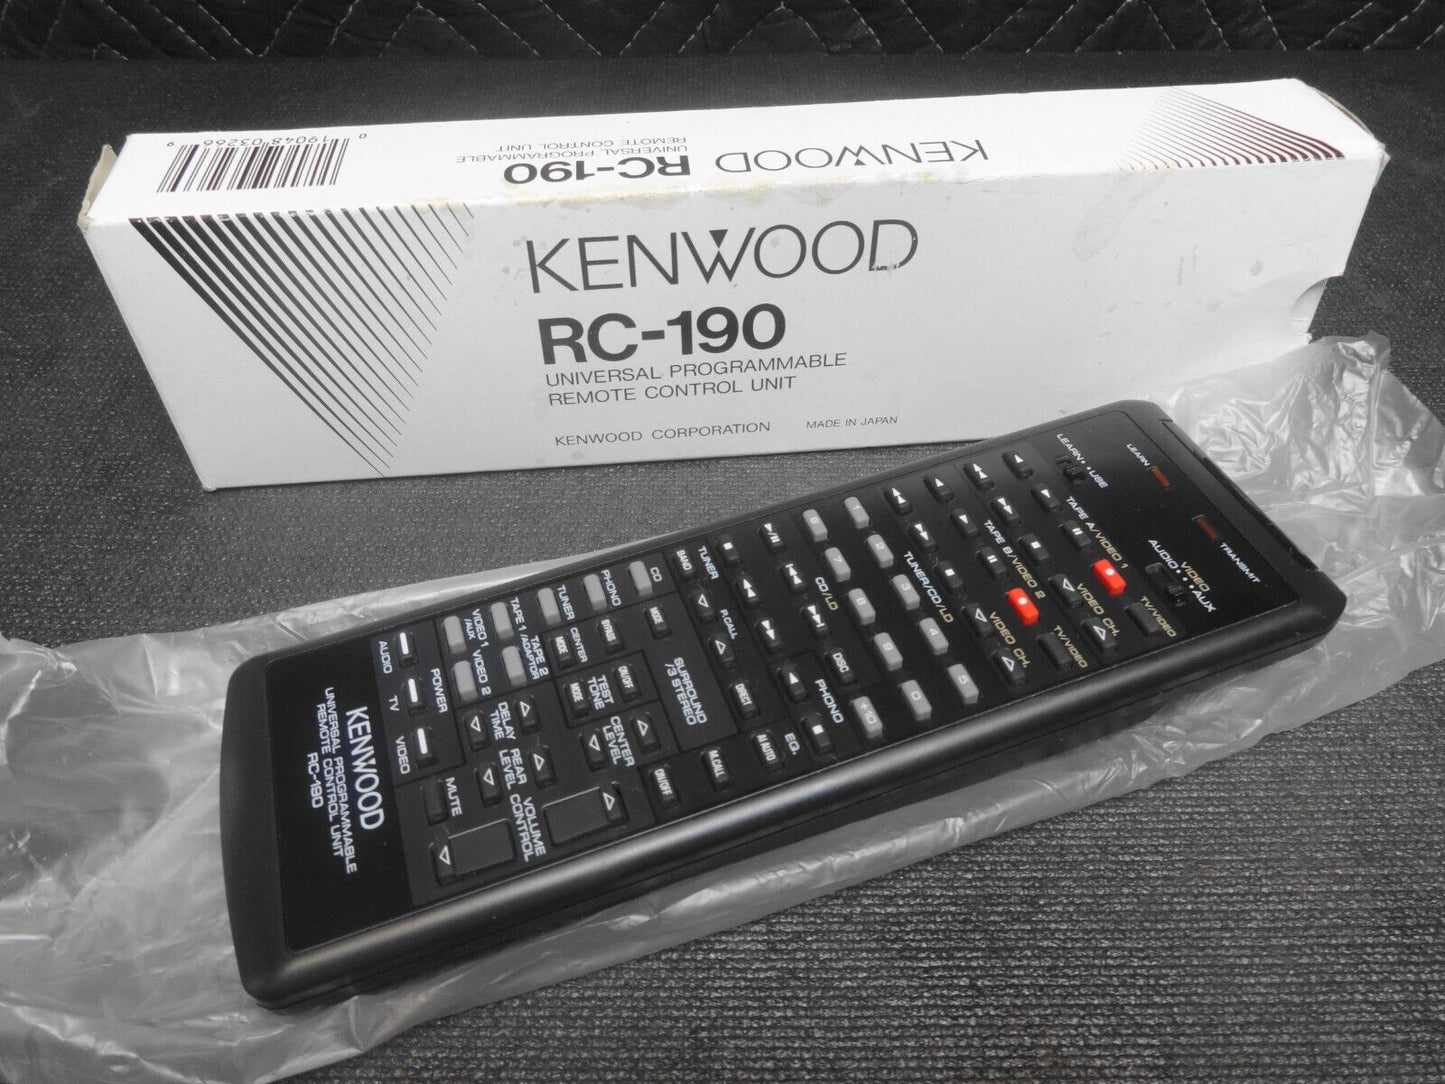 Kenwood Rc-190 Universal Learning Remote Control Kc992 DPR 892 Ka892 Kc922